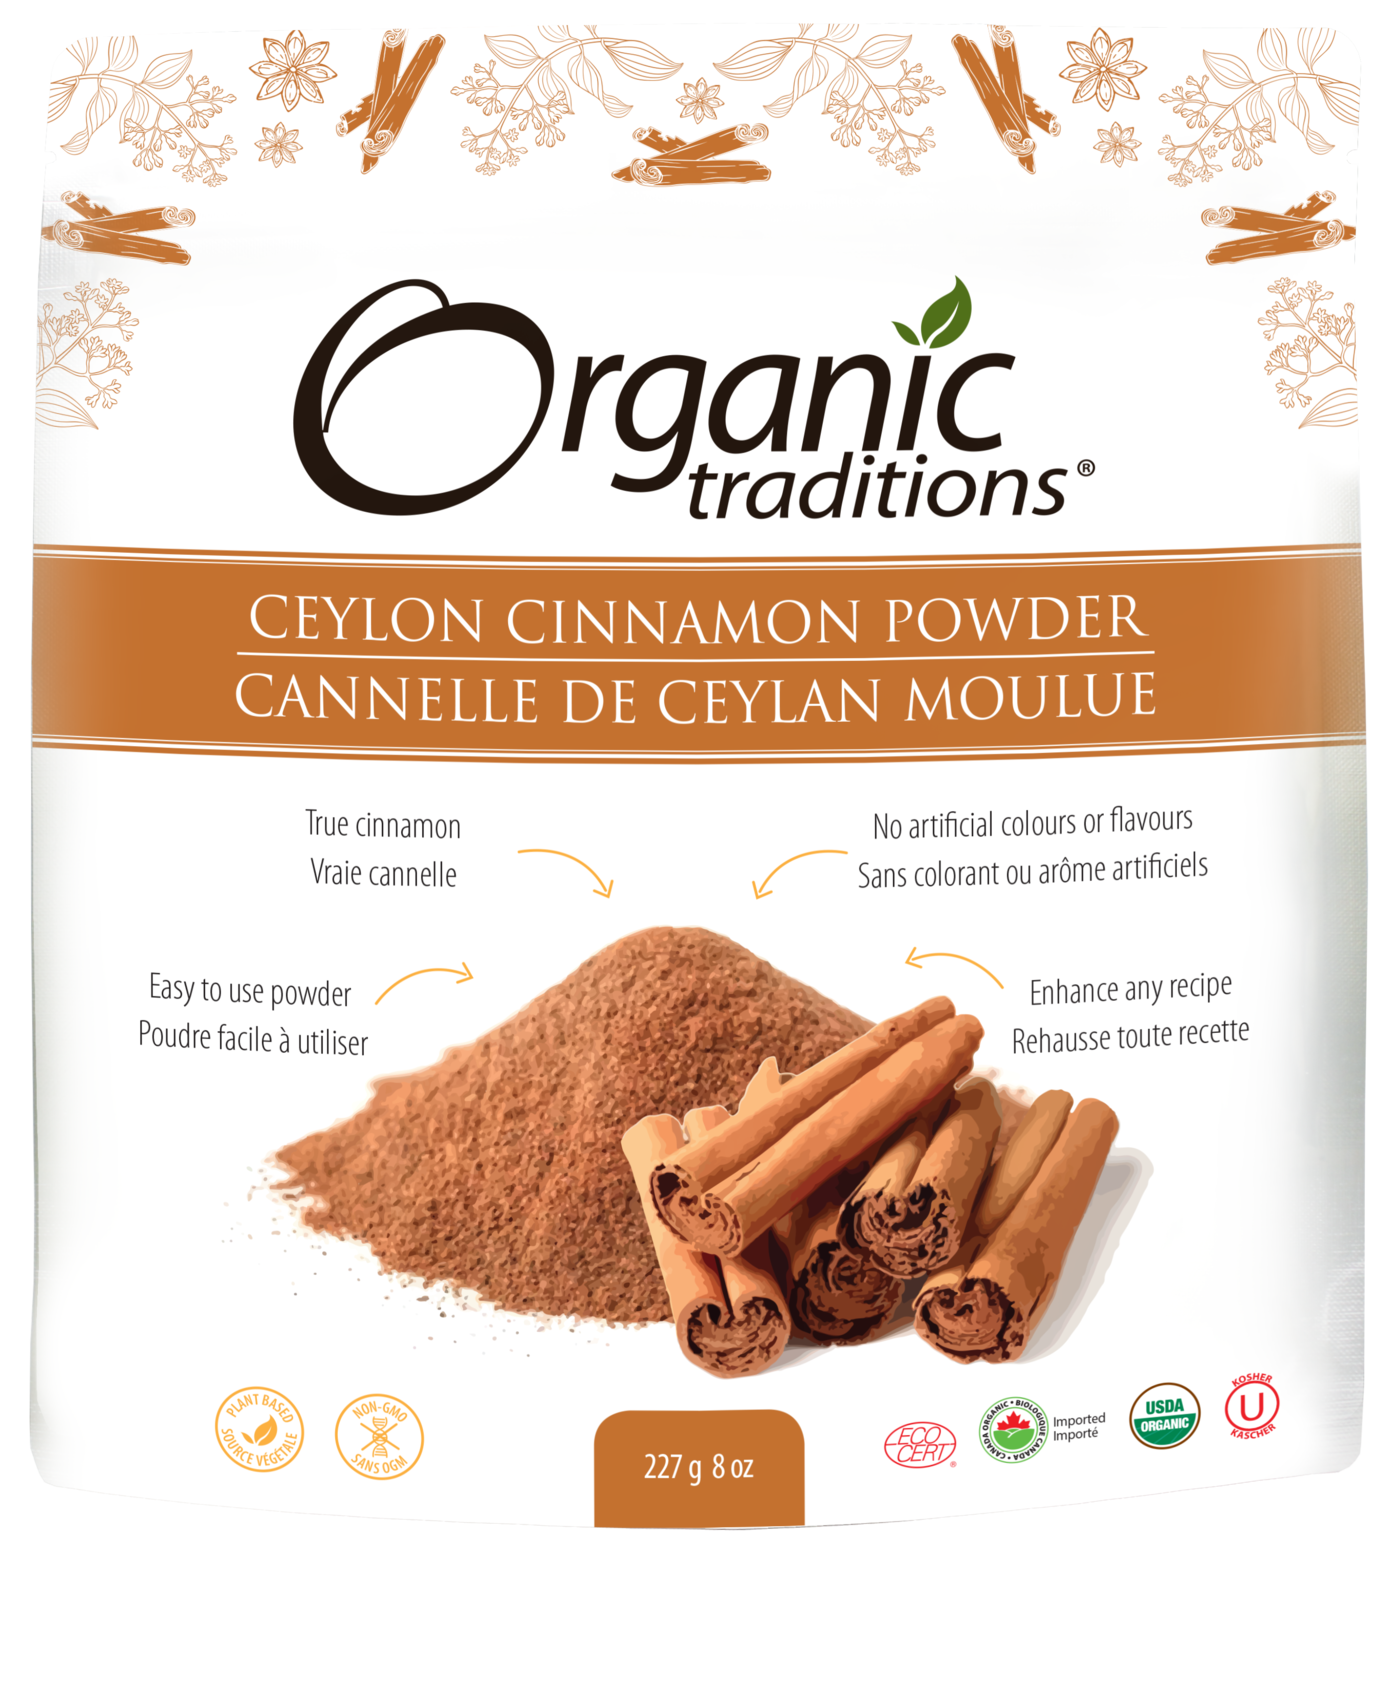 Organic Traditions Ceylon Cinnamon Powder